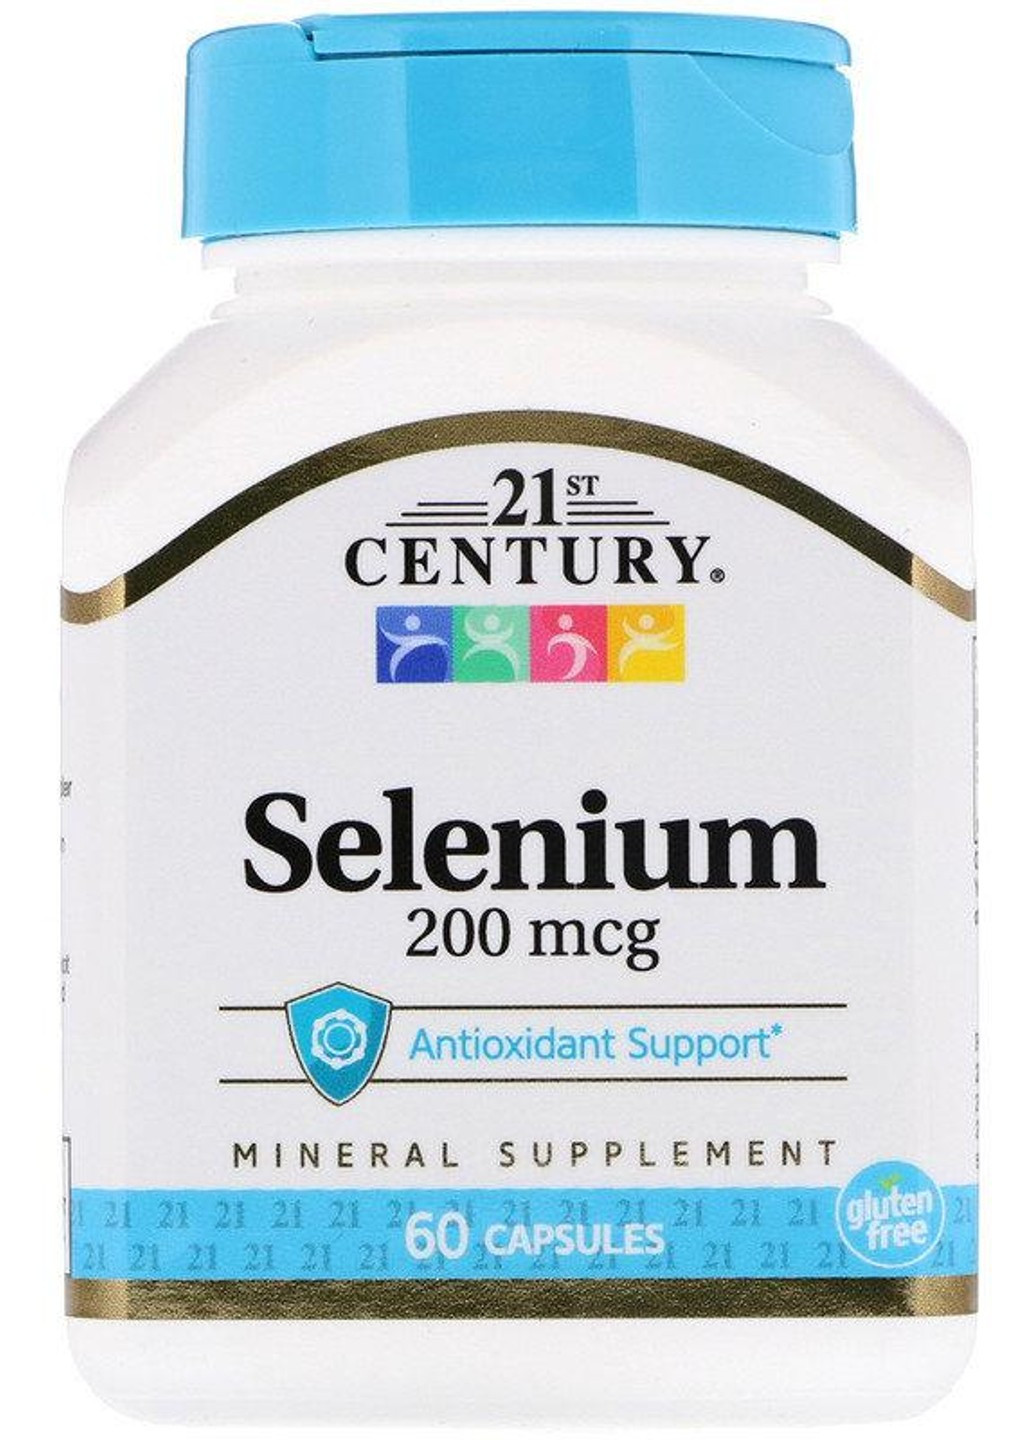 Селен Selenium 200 mcg (60 капс) 21 століття центурі селениум 21st Century (255409150)